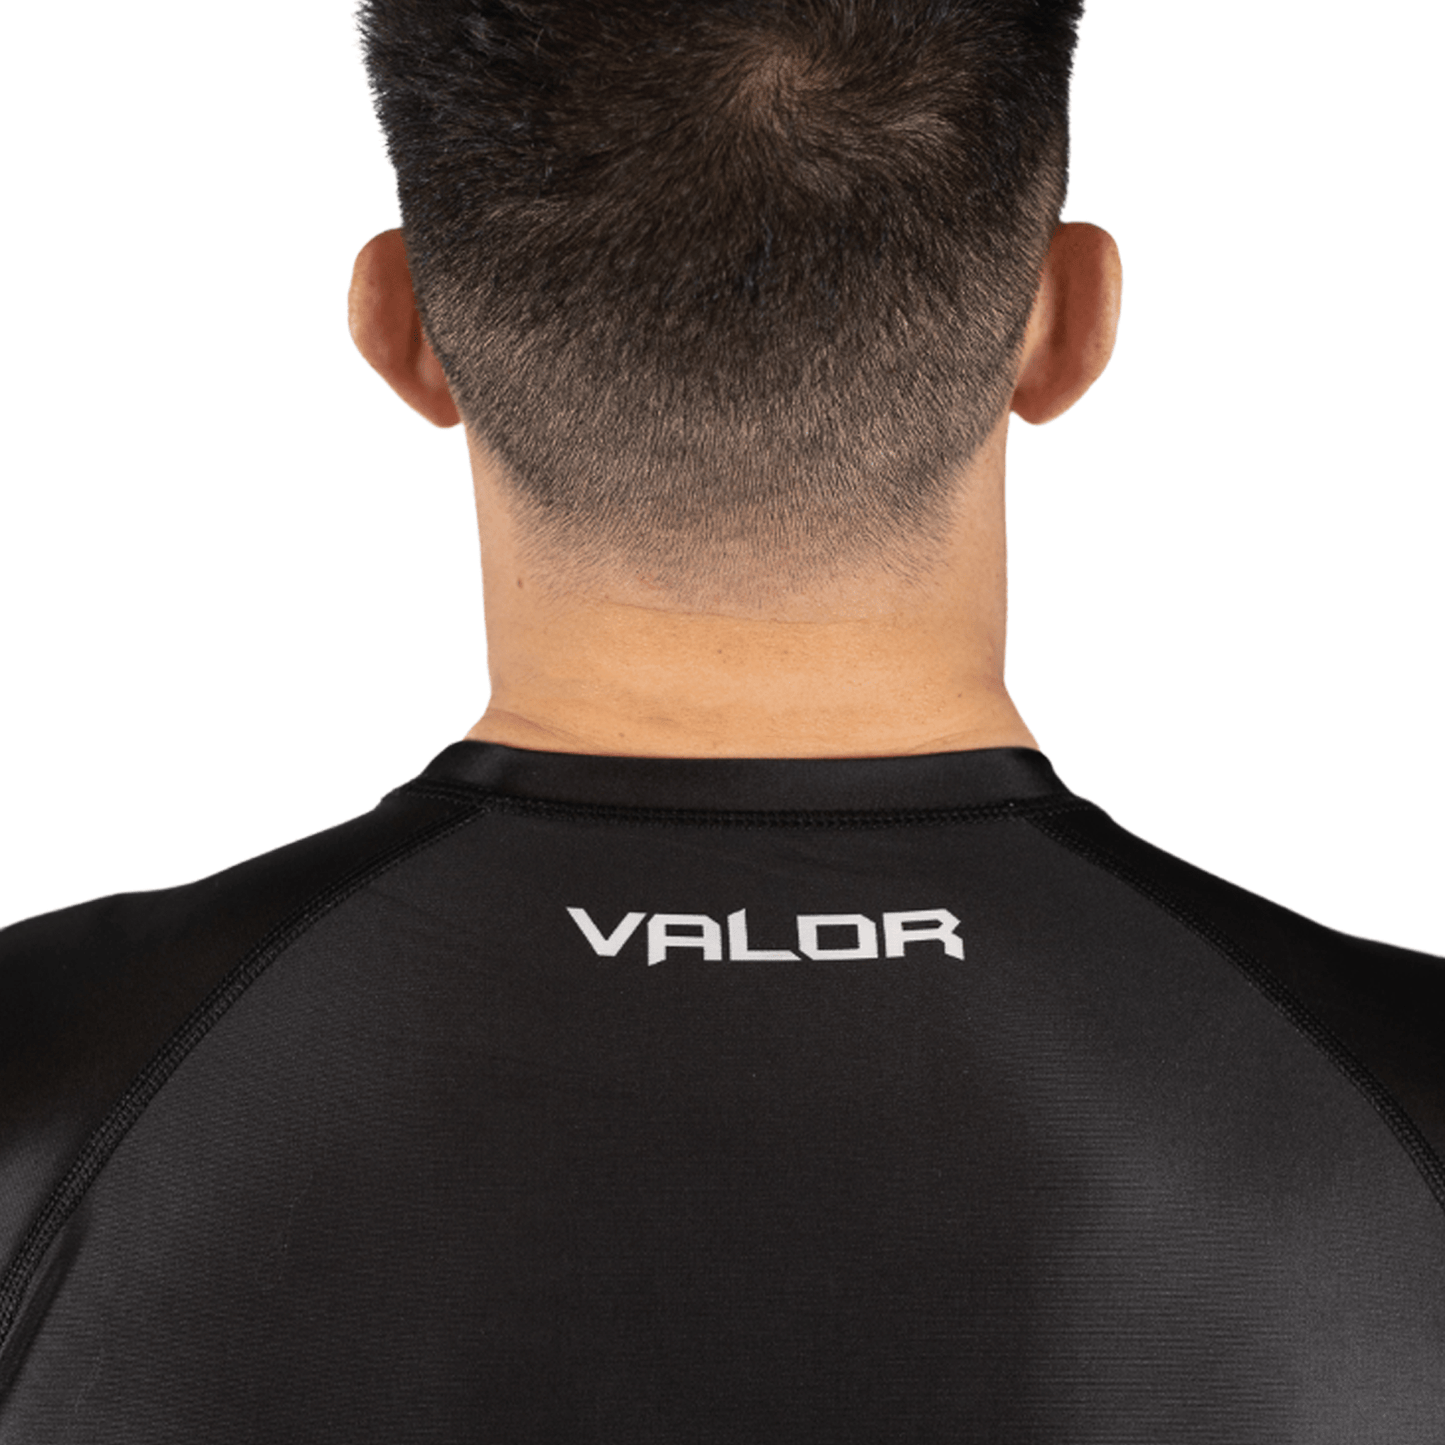 VALOR CLASSIC LONG SLEEVE RASH GUARD BLACK  Valor Fightwear   